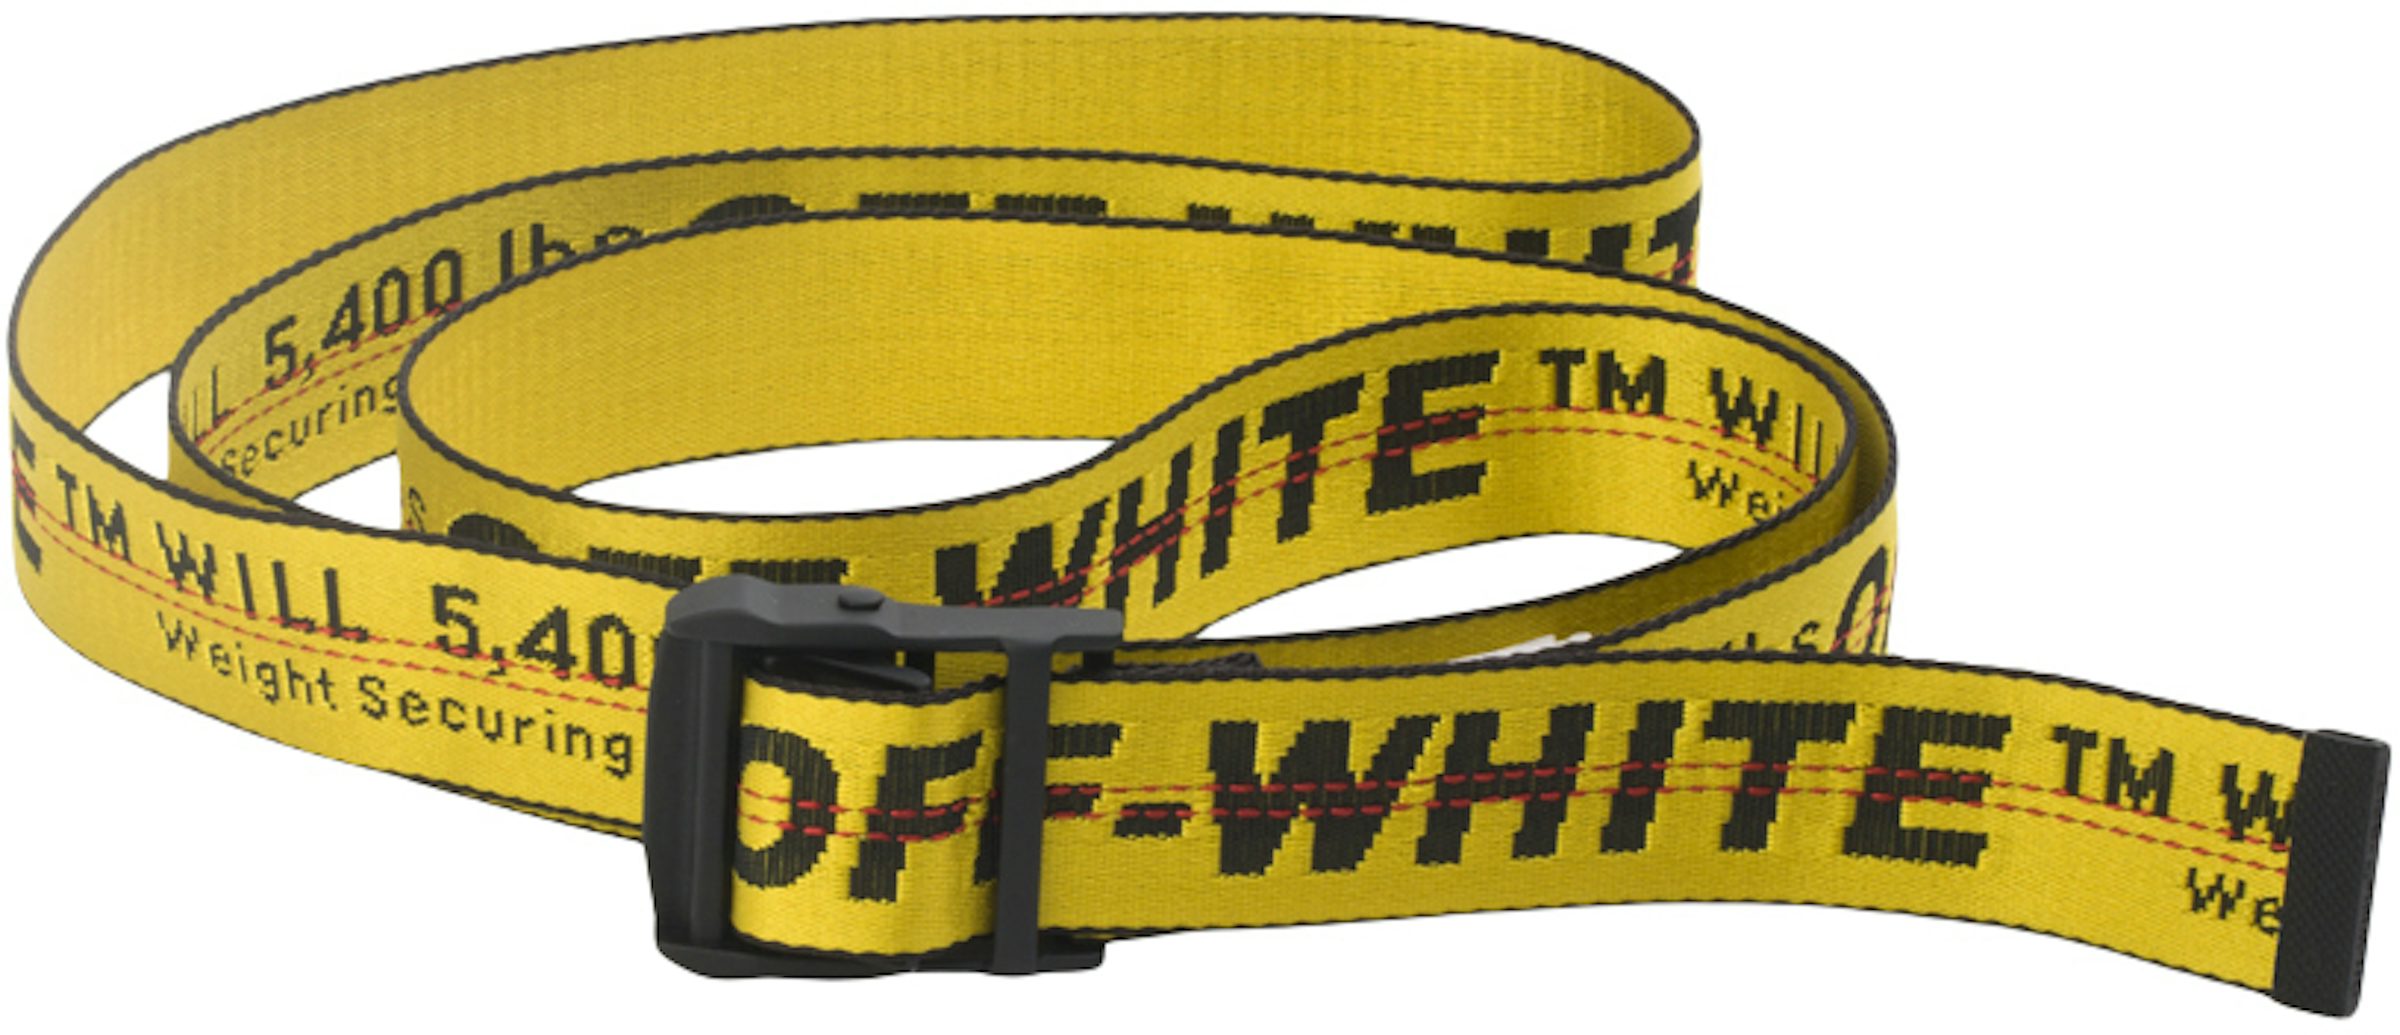 Off-White c/o Virgil Abloh Arrow-plaque Leather Belt in Black for Men